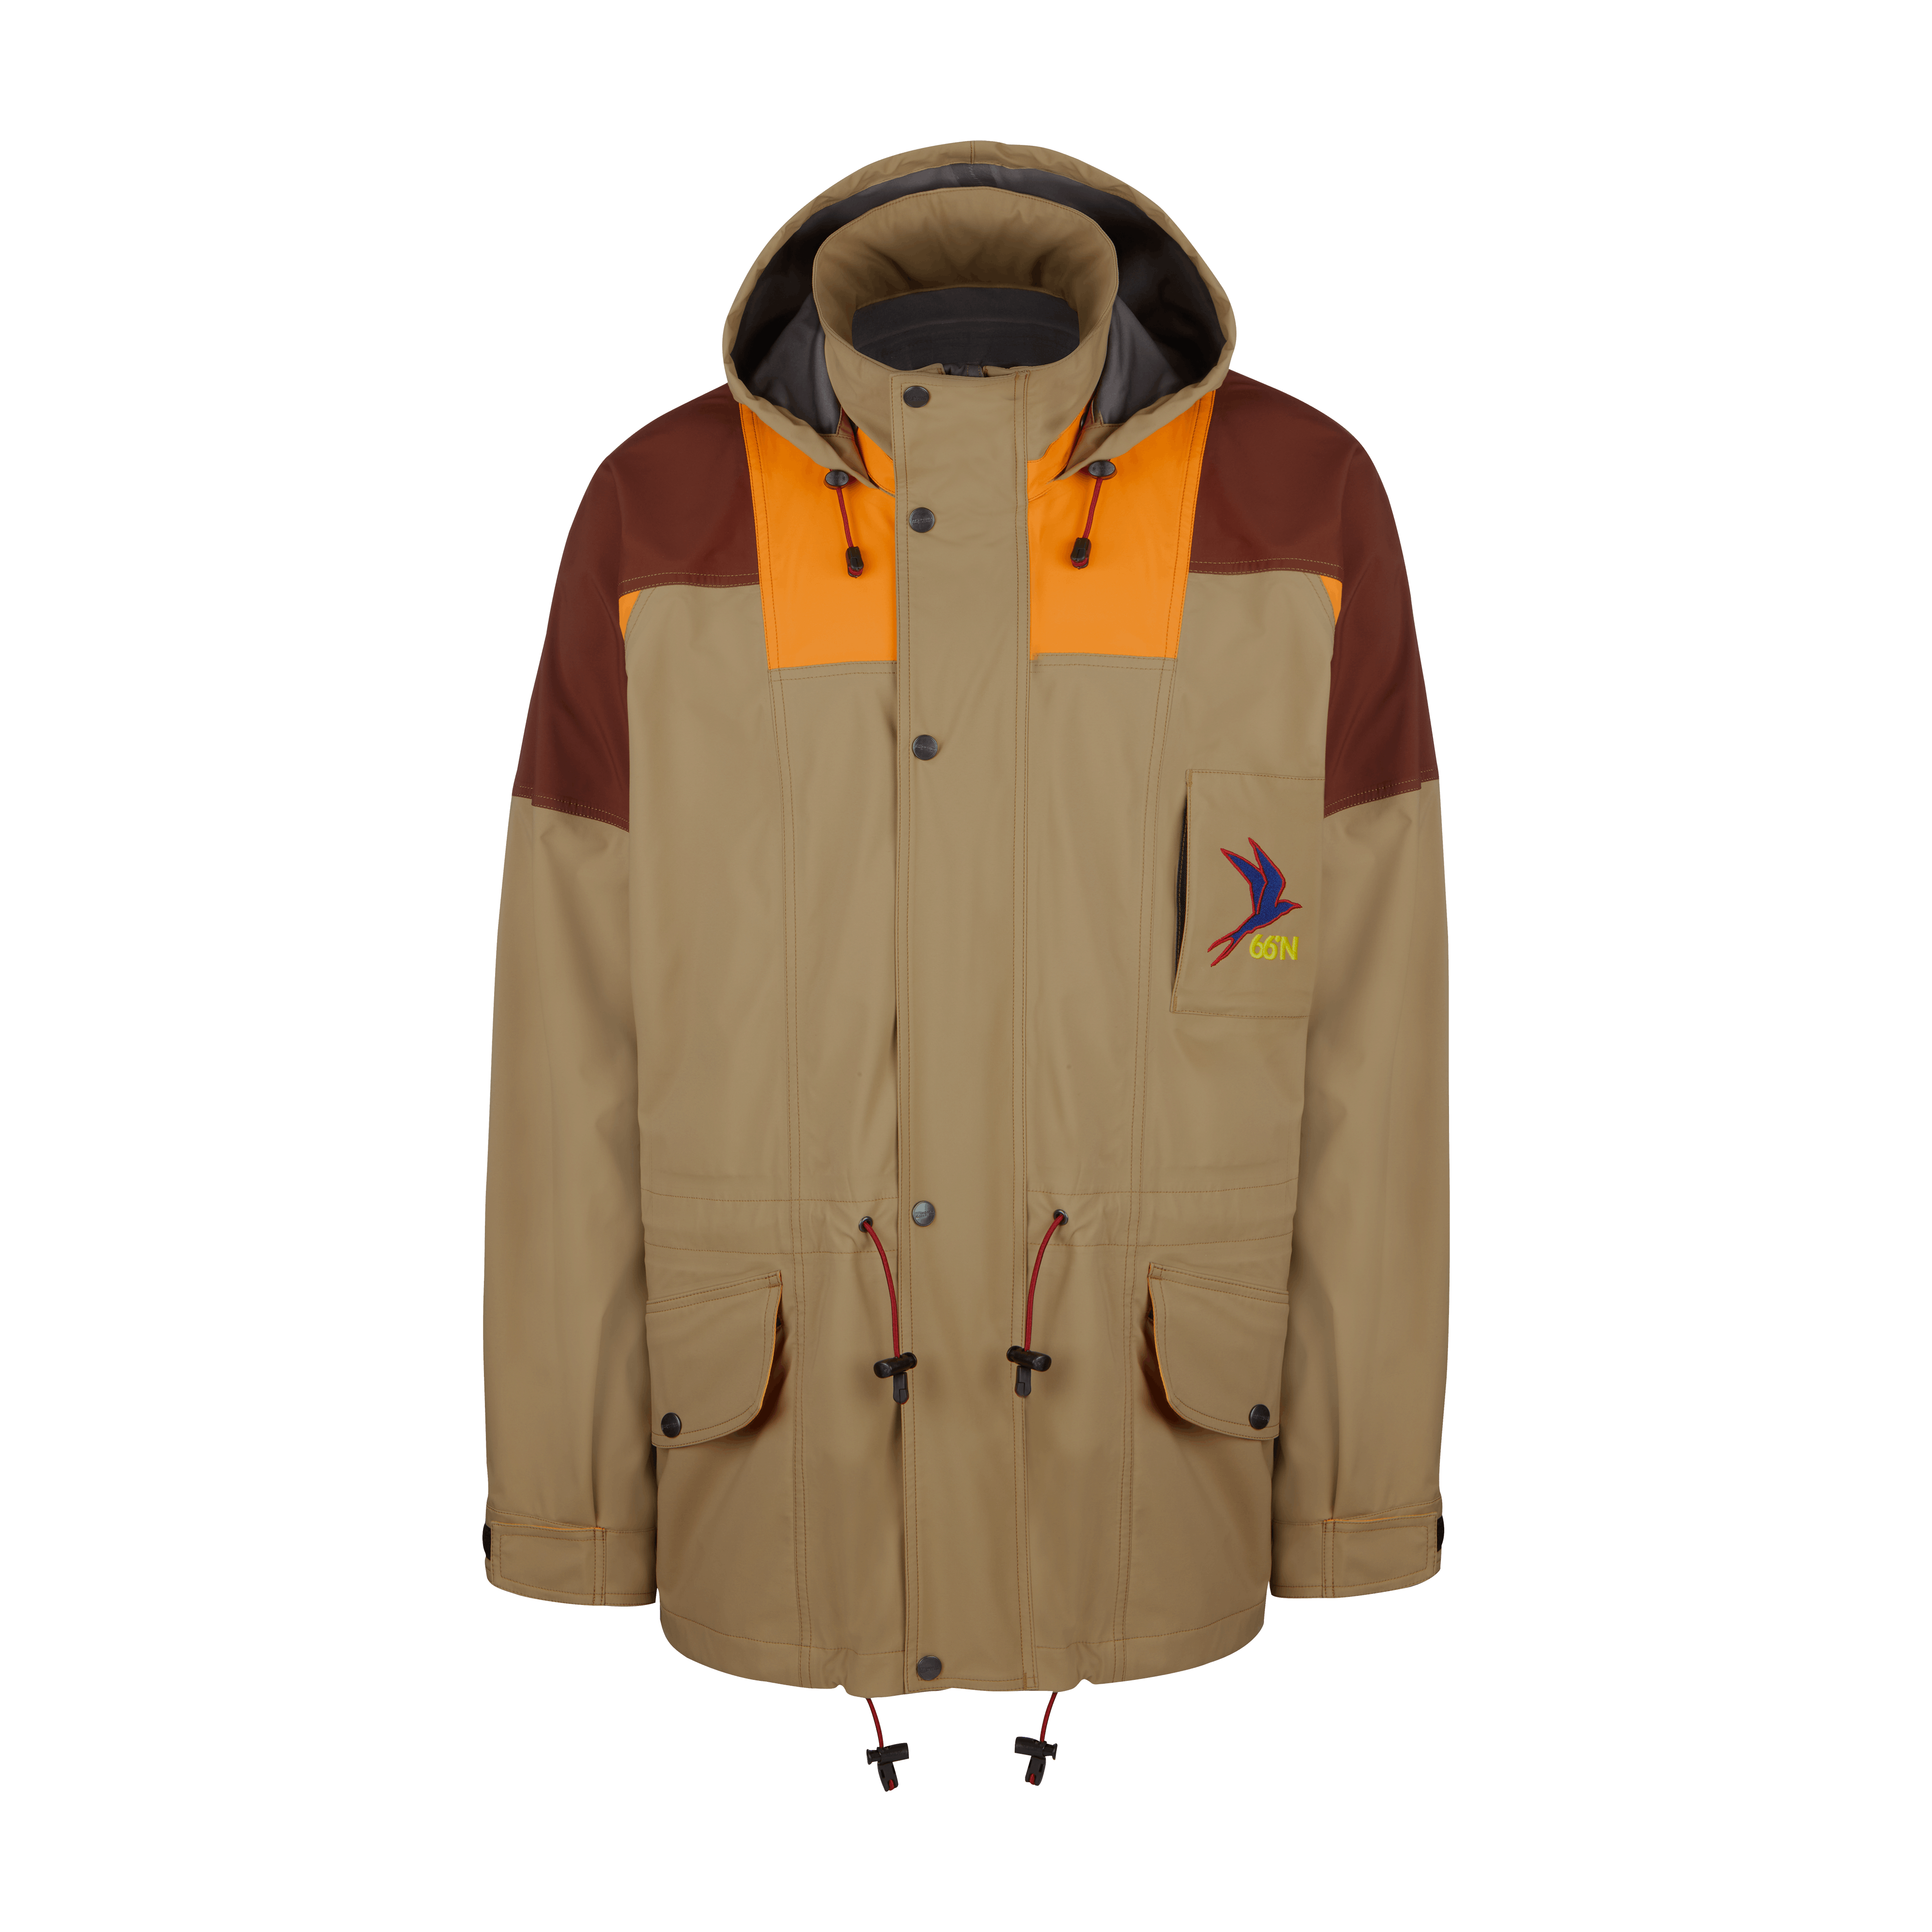 66 North Men's Kría Jackets & Coats - Camel / Oxblood / Poppy - Xs/s